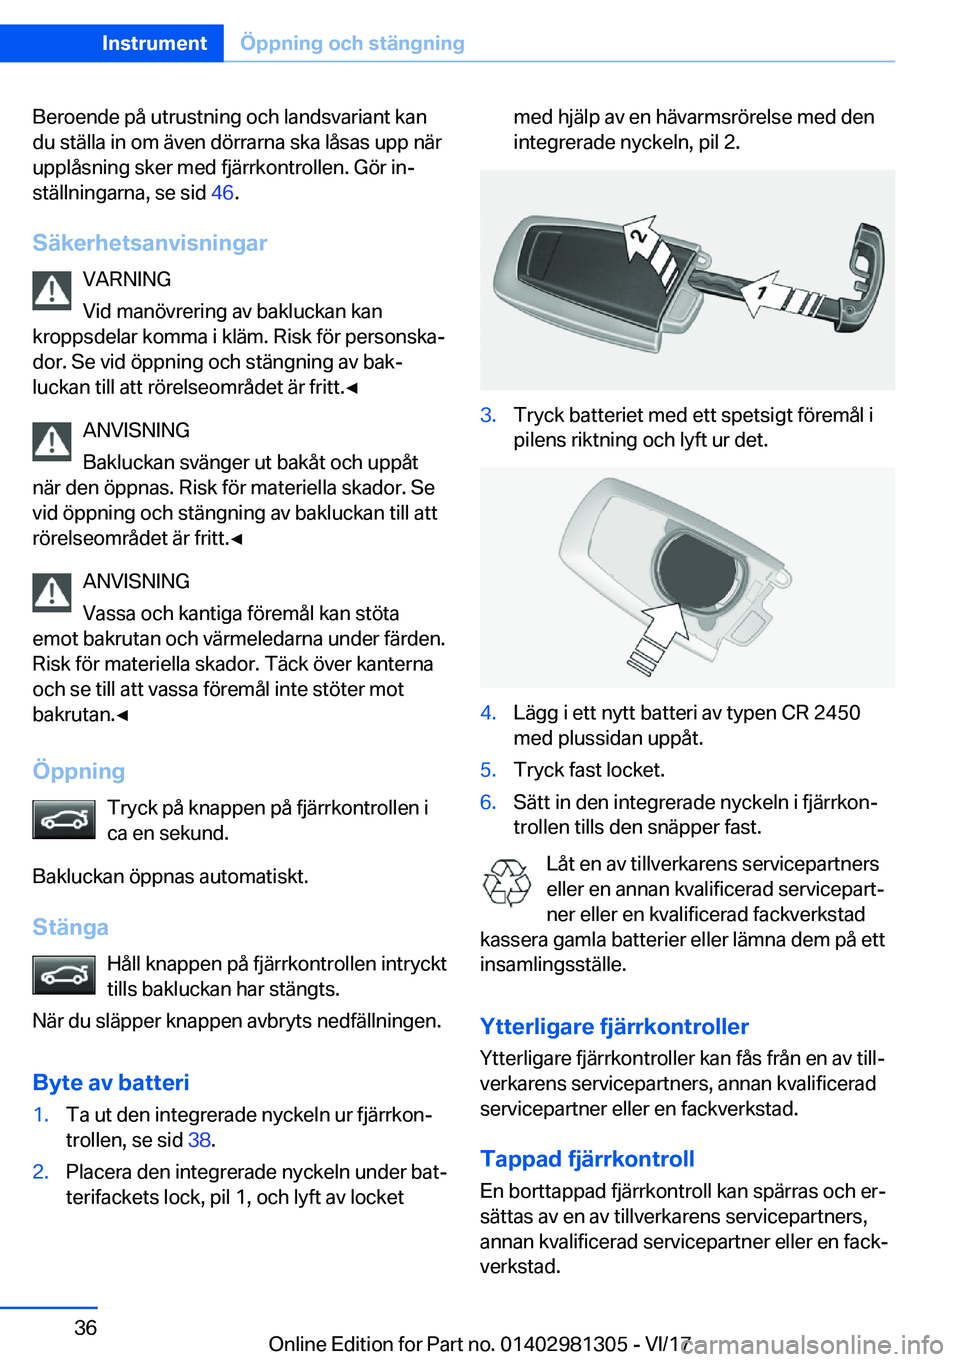 BMW X4 2018  InstruktionsbÖcker (in Swedish) �B�e�r�o�e�n�d�e� �p�å� �u�t�r�u�s�t�n�i�n�g� �o�c�h� �l�a�n�d�s�v�a�r�i�a�n�t� �k�a�n
�d�u� �s�t�ä�l�l�a� �i�n� �o�m� �ä�v�e�n� �d�